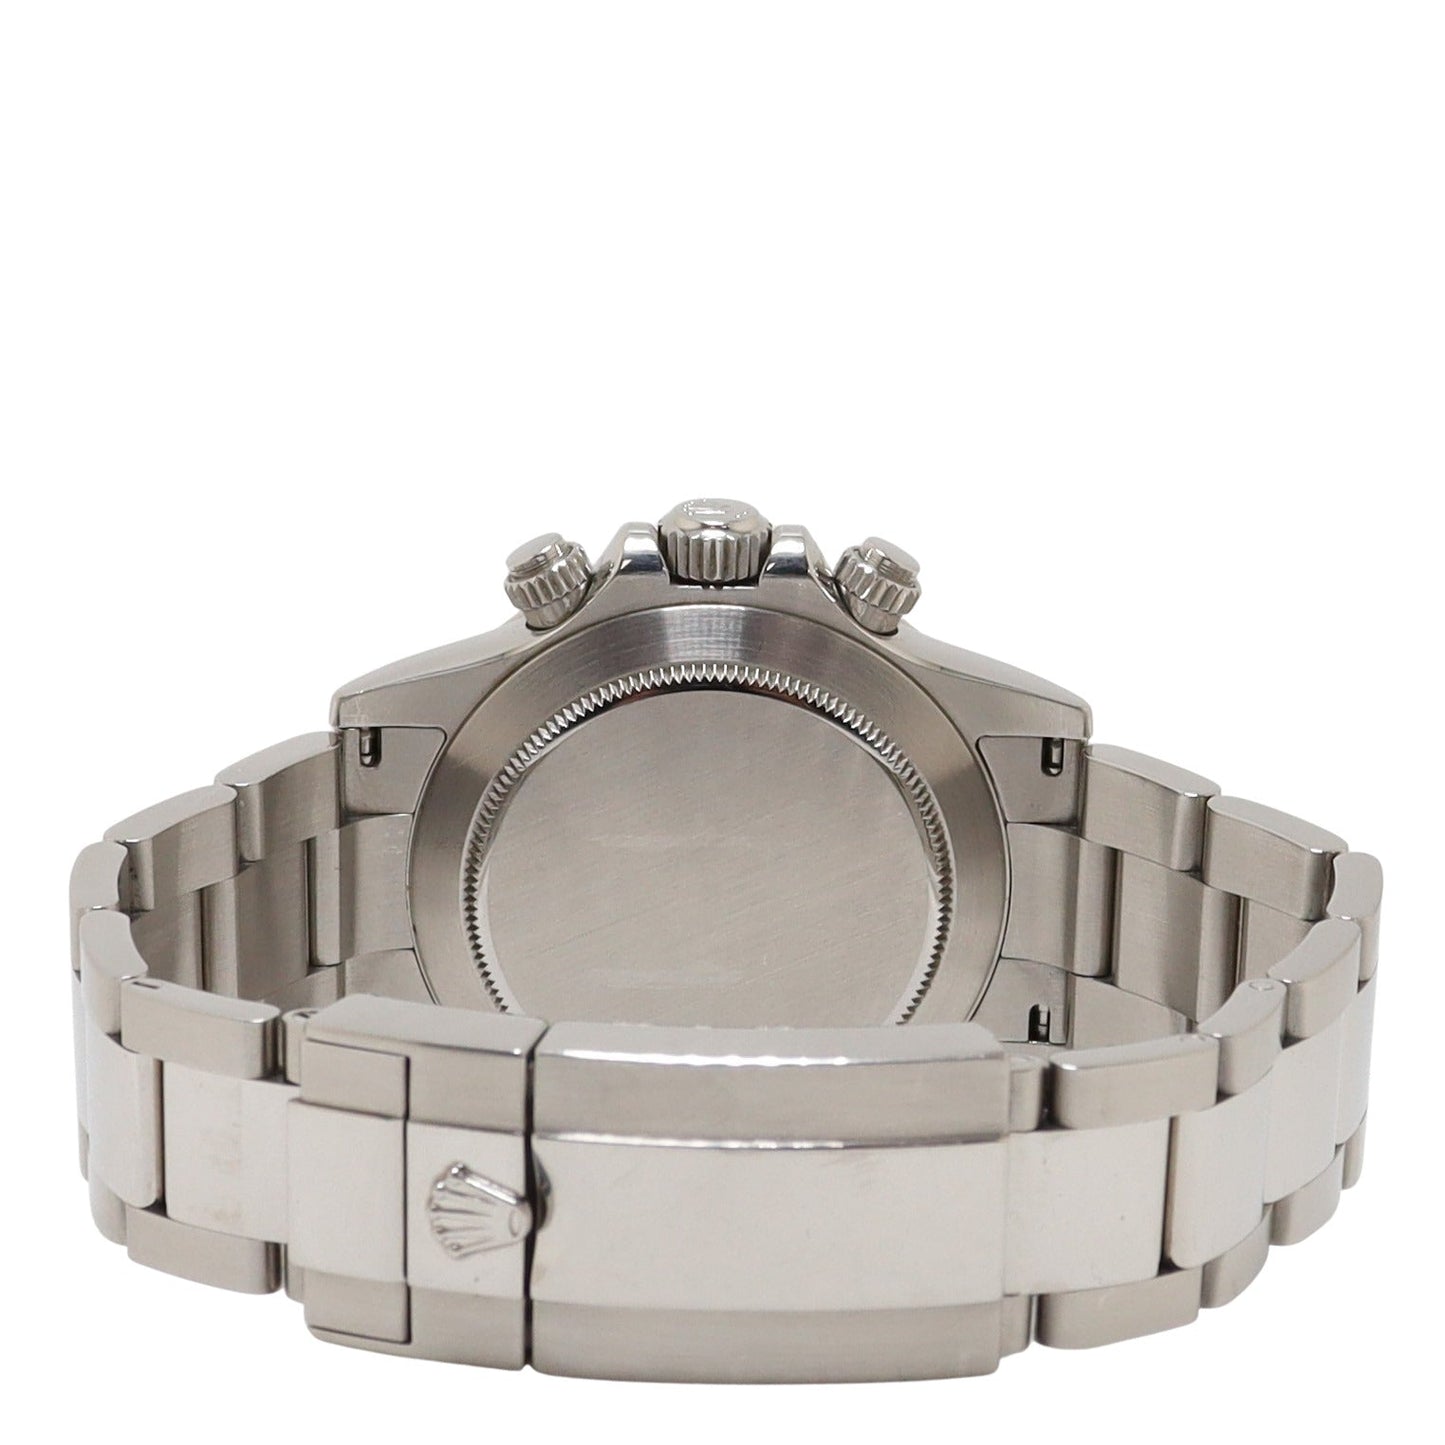 Rolex Daytona 40mm Stainless Steel White Chronograph Dial Watch Reference# 116520 - Happy Jewelers Fine Jewelry Lifetime Warranty